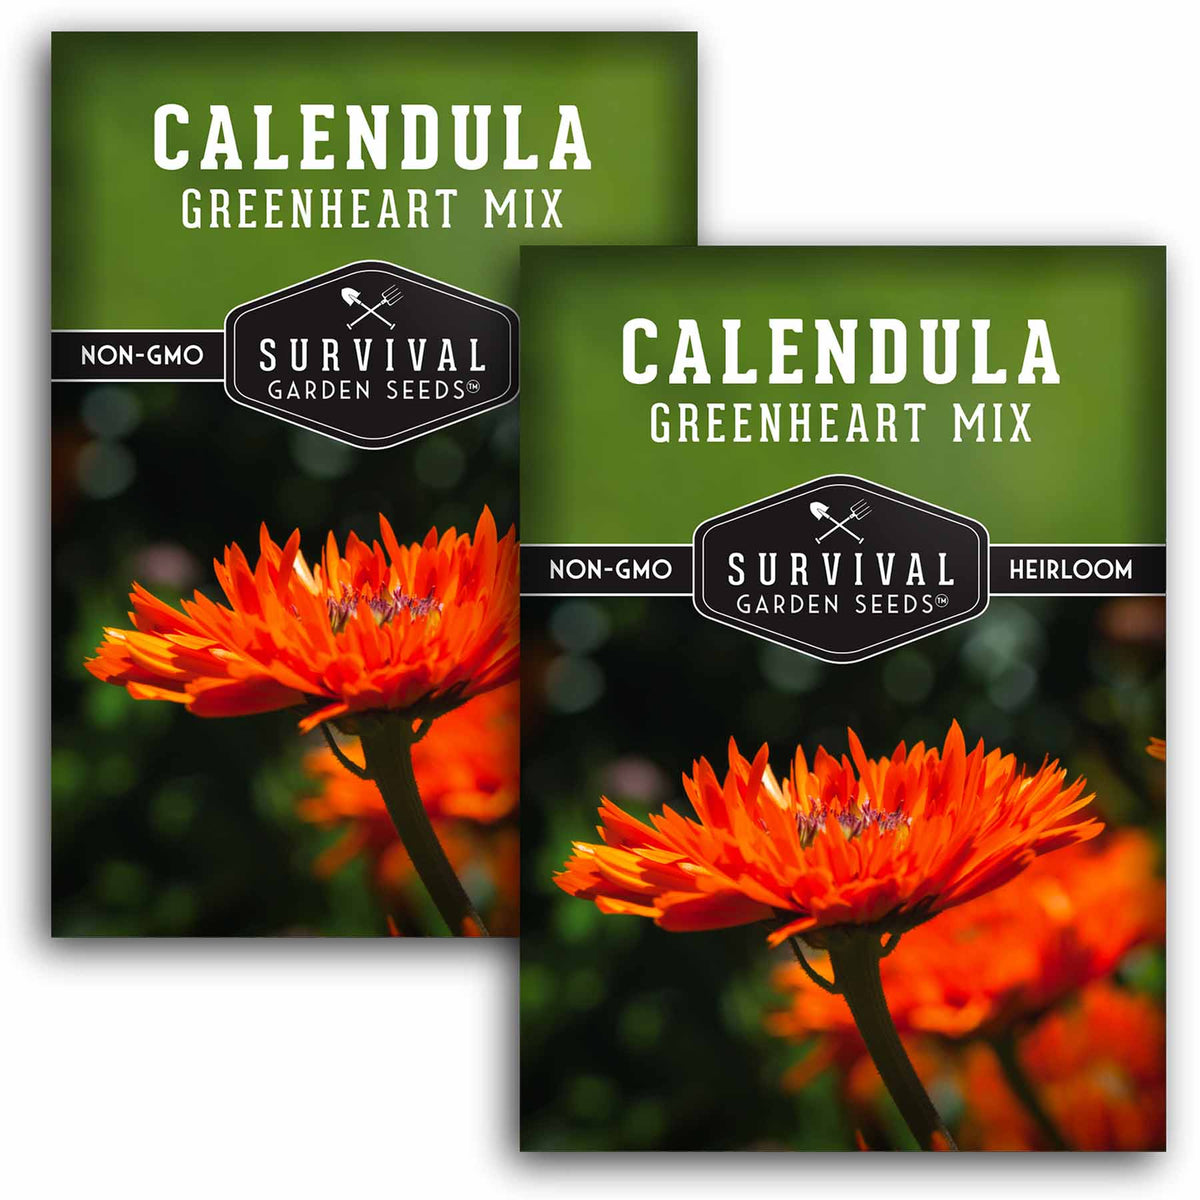 2 packets of Greenheart Mix Calendula seeds